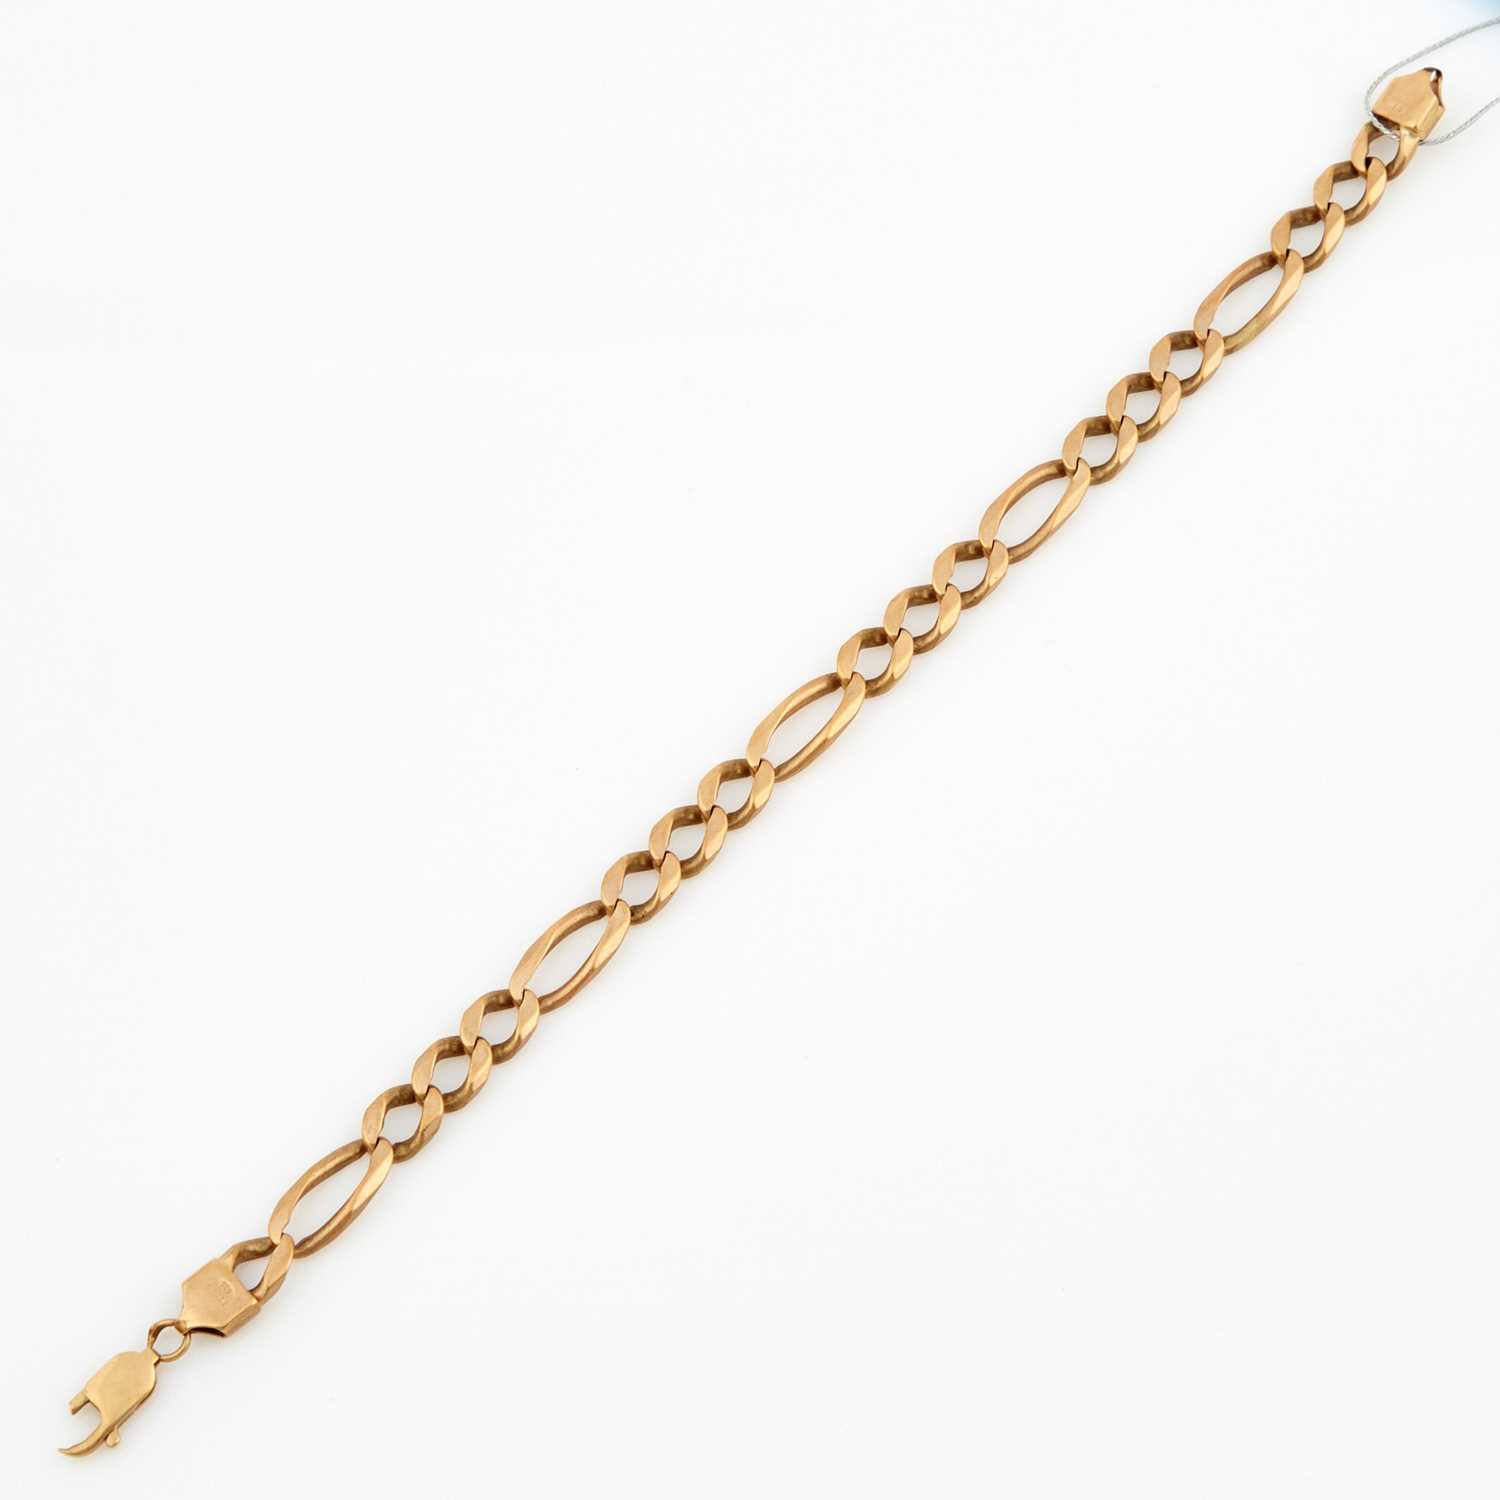 Lot 353 - Gold Flexible Bracelet, 14K 16 dwt., damaged